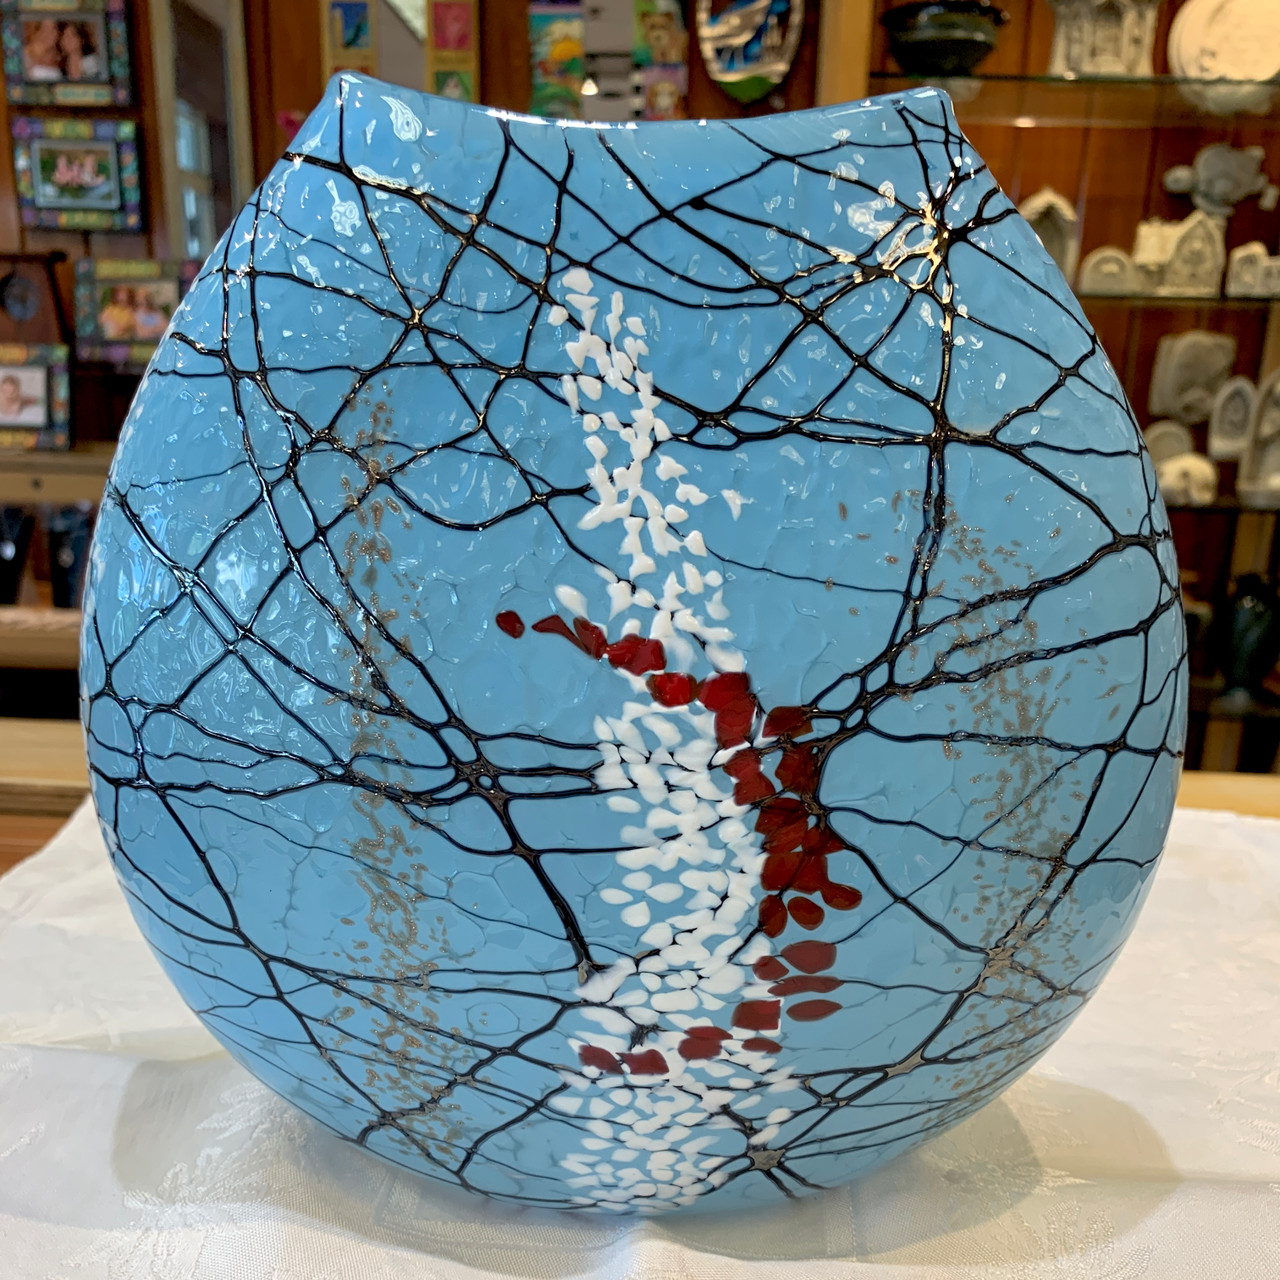 Vines Art Glass Heart Ornaments